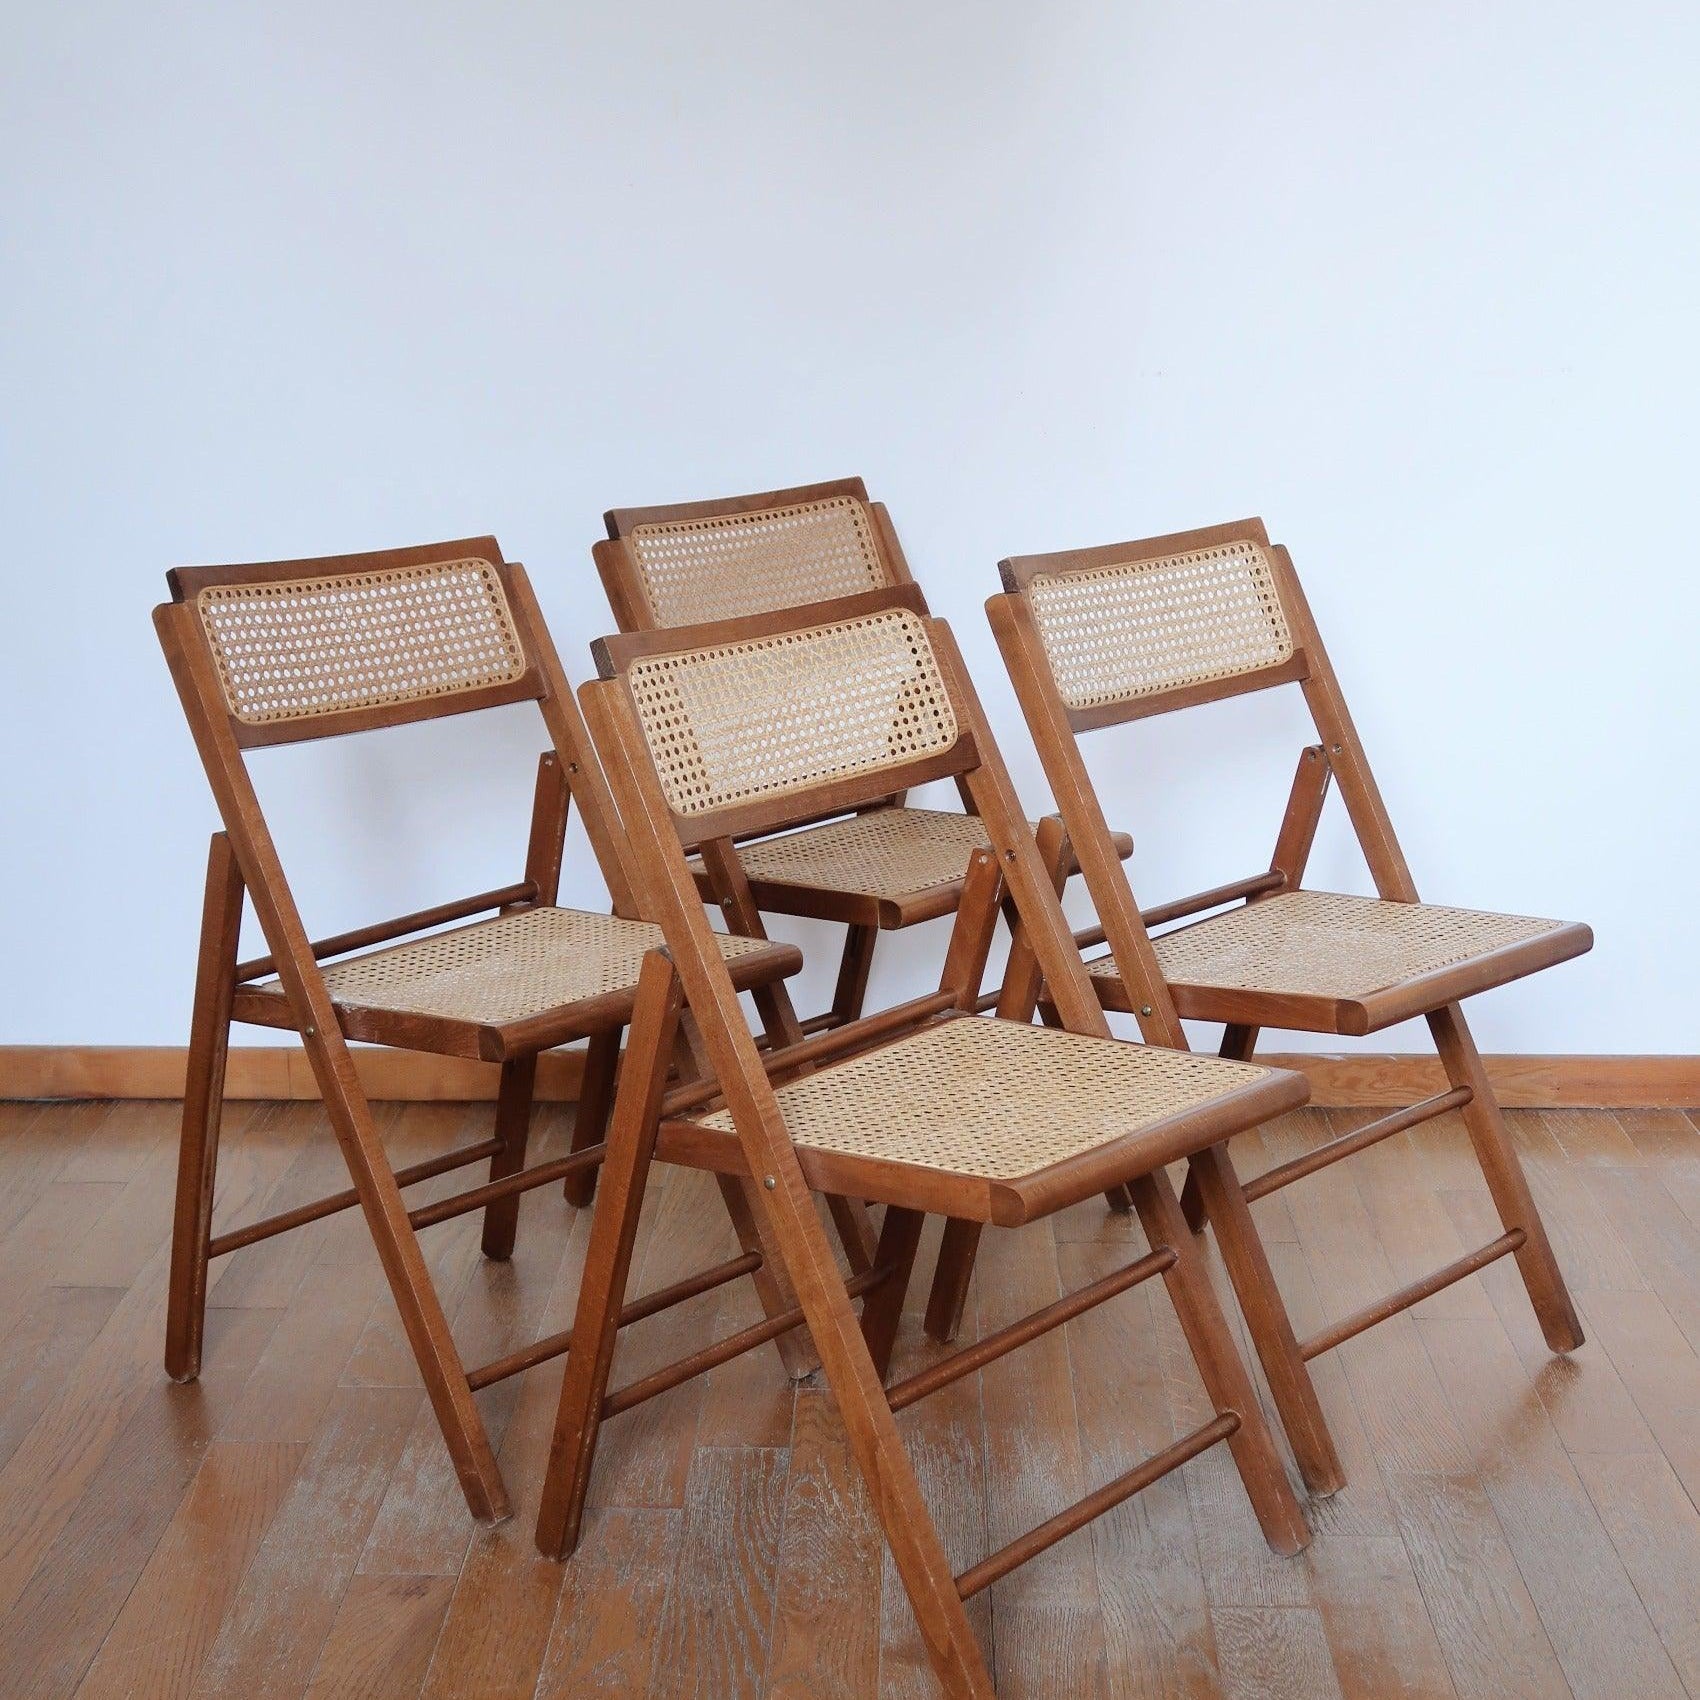 4 chaises pliantes pliables bois cannage cannées vintage années 60 teck rotin osier